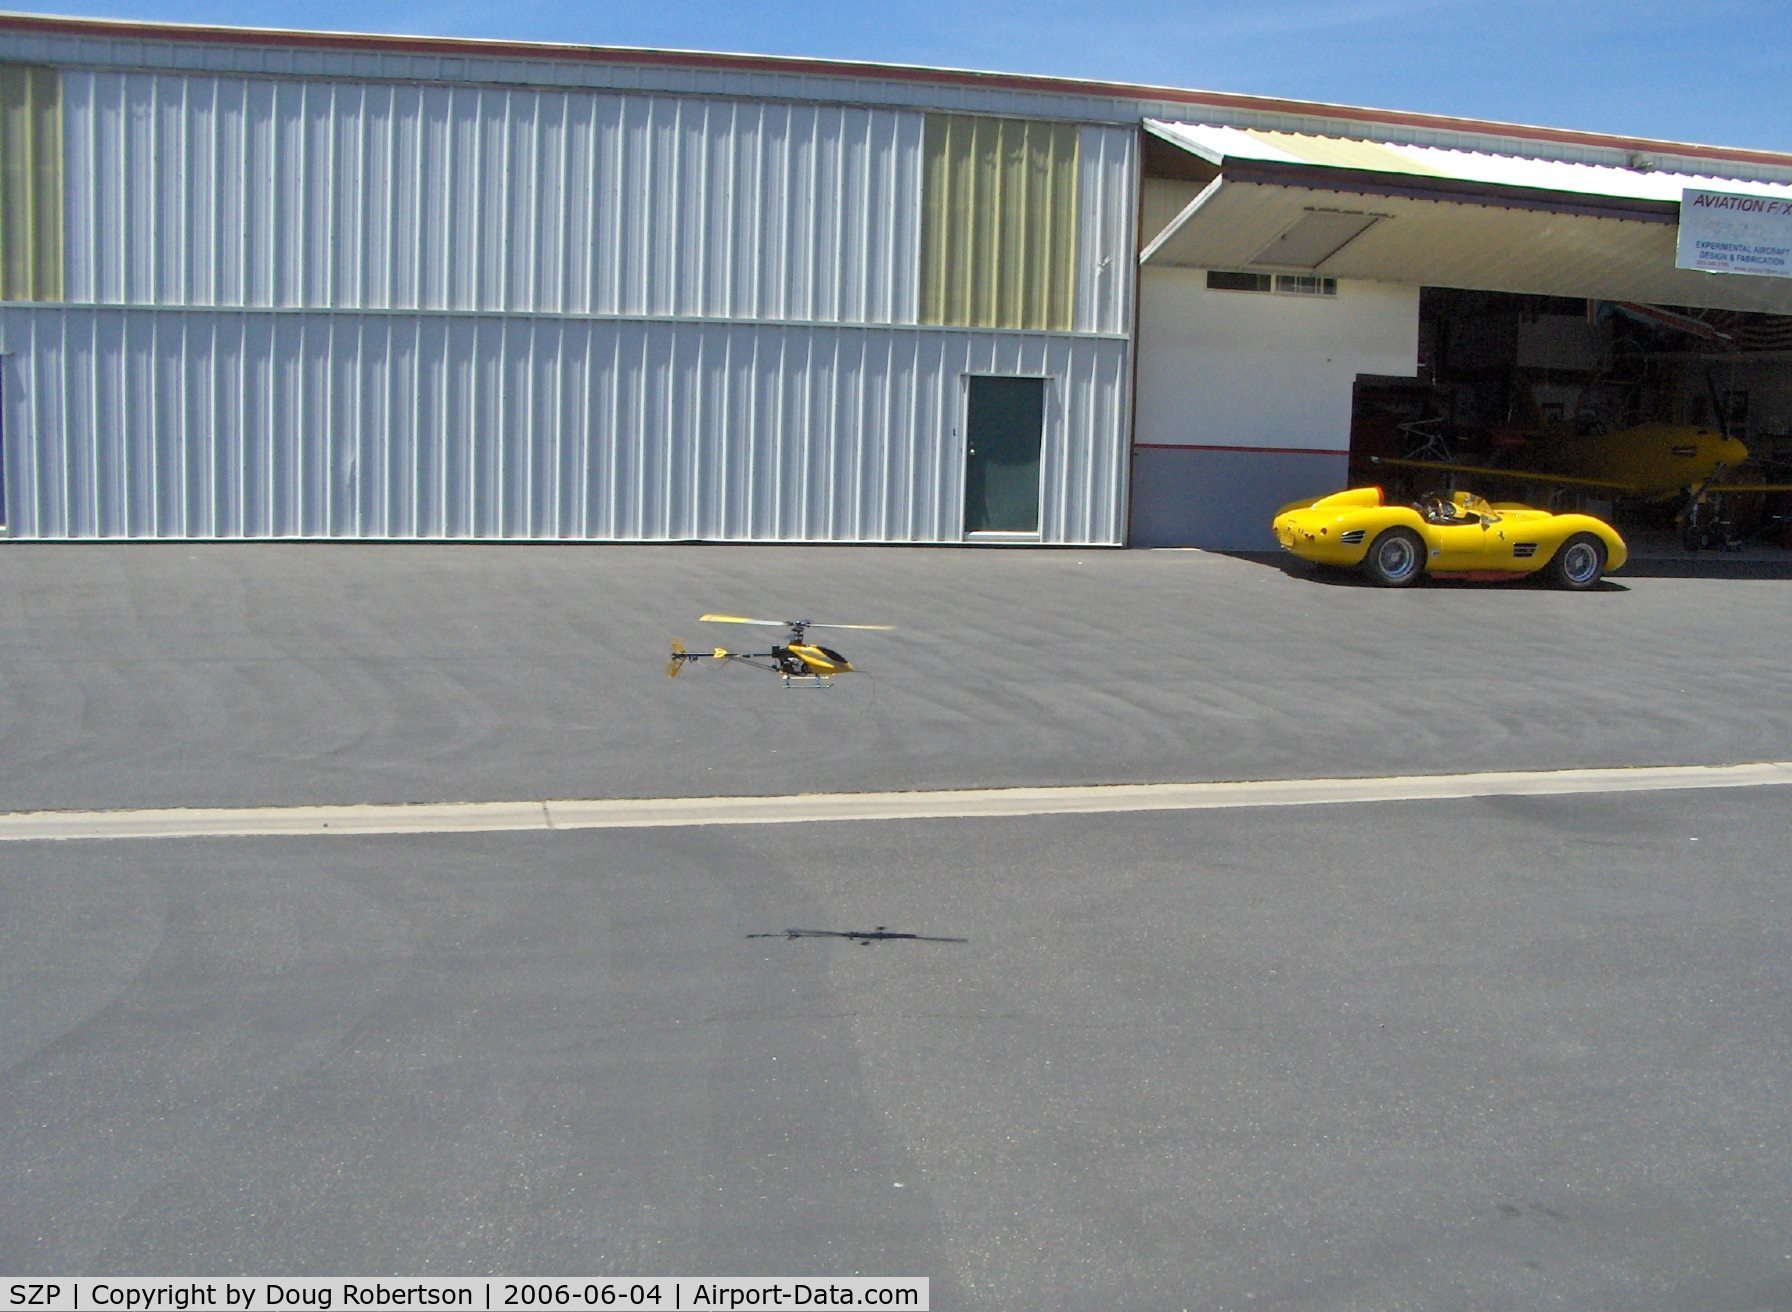 Santa Paula Airport (SZP) - T-REX radio-controlled helicopter, in flight (chasing the Ferrari?)